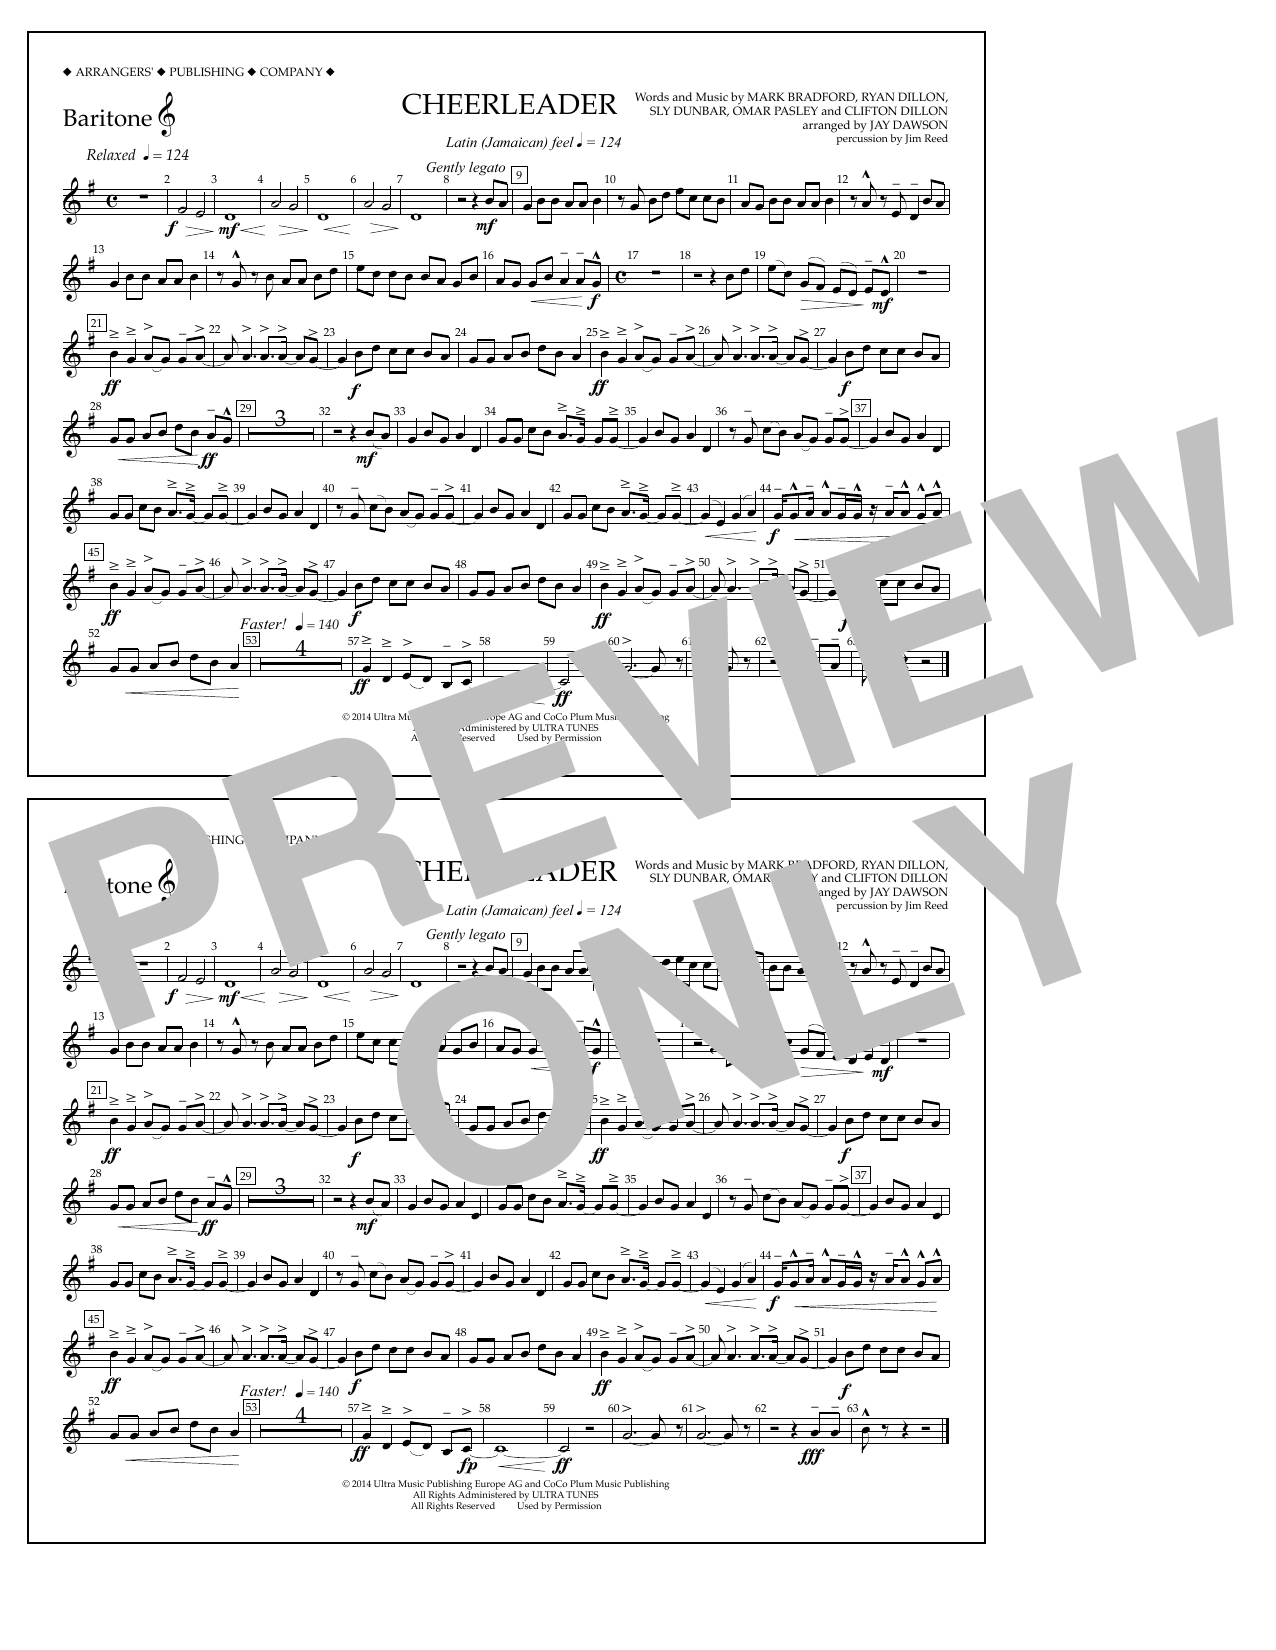 Jay Dawson Cheerleader - Baritone T.C. Sheet Music Notes & Chords for Marching Band - Download or Print PDF